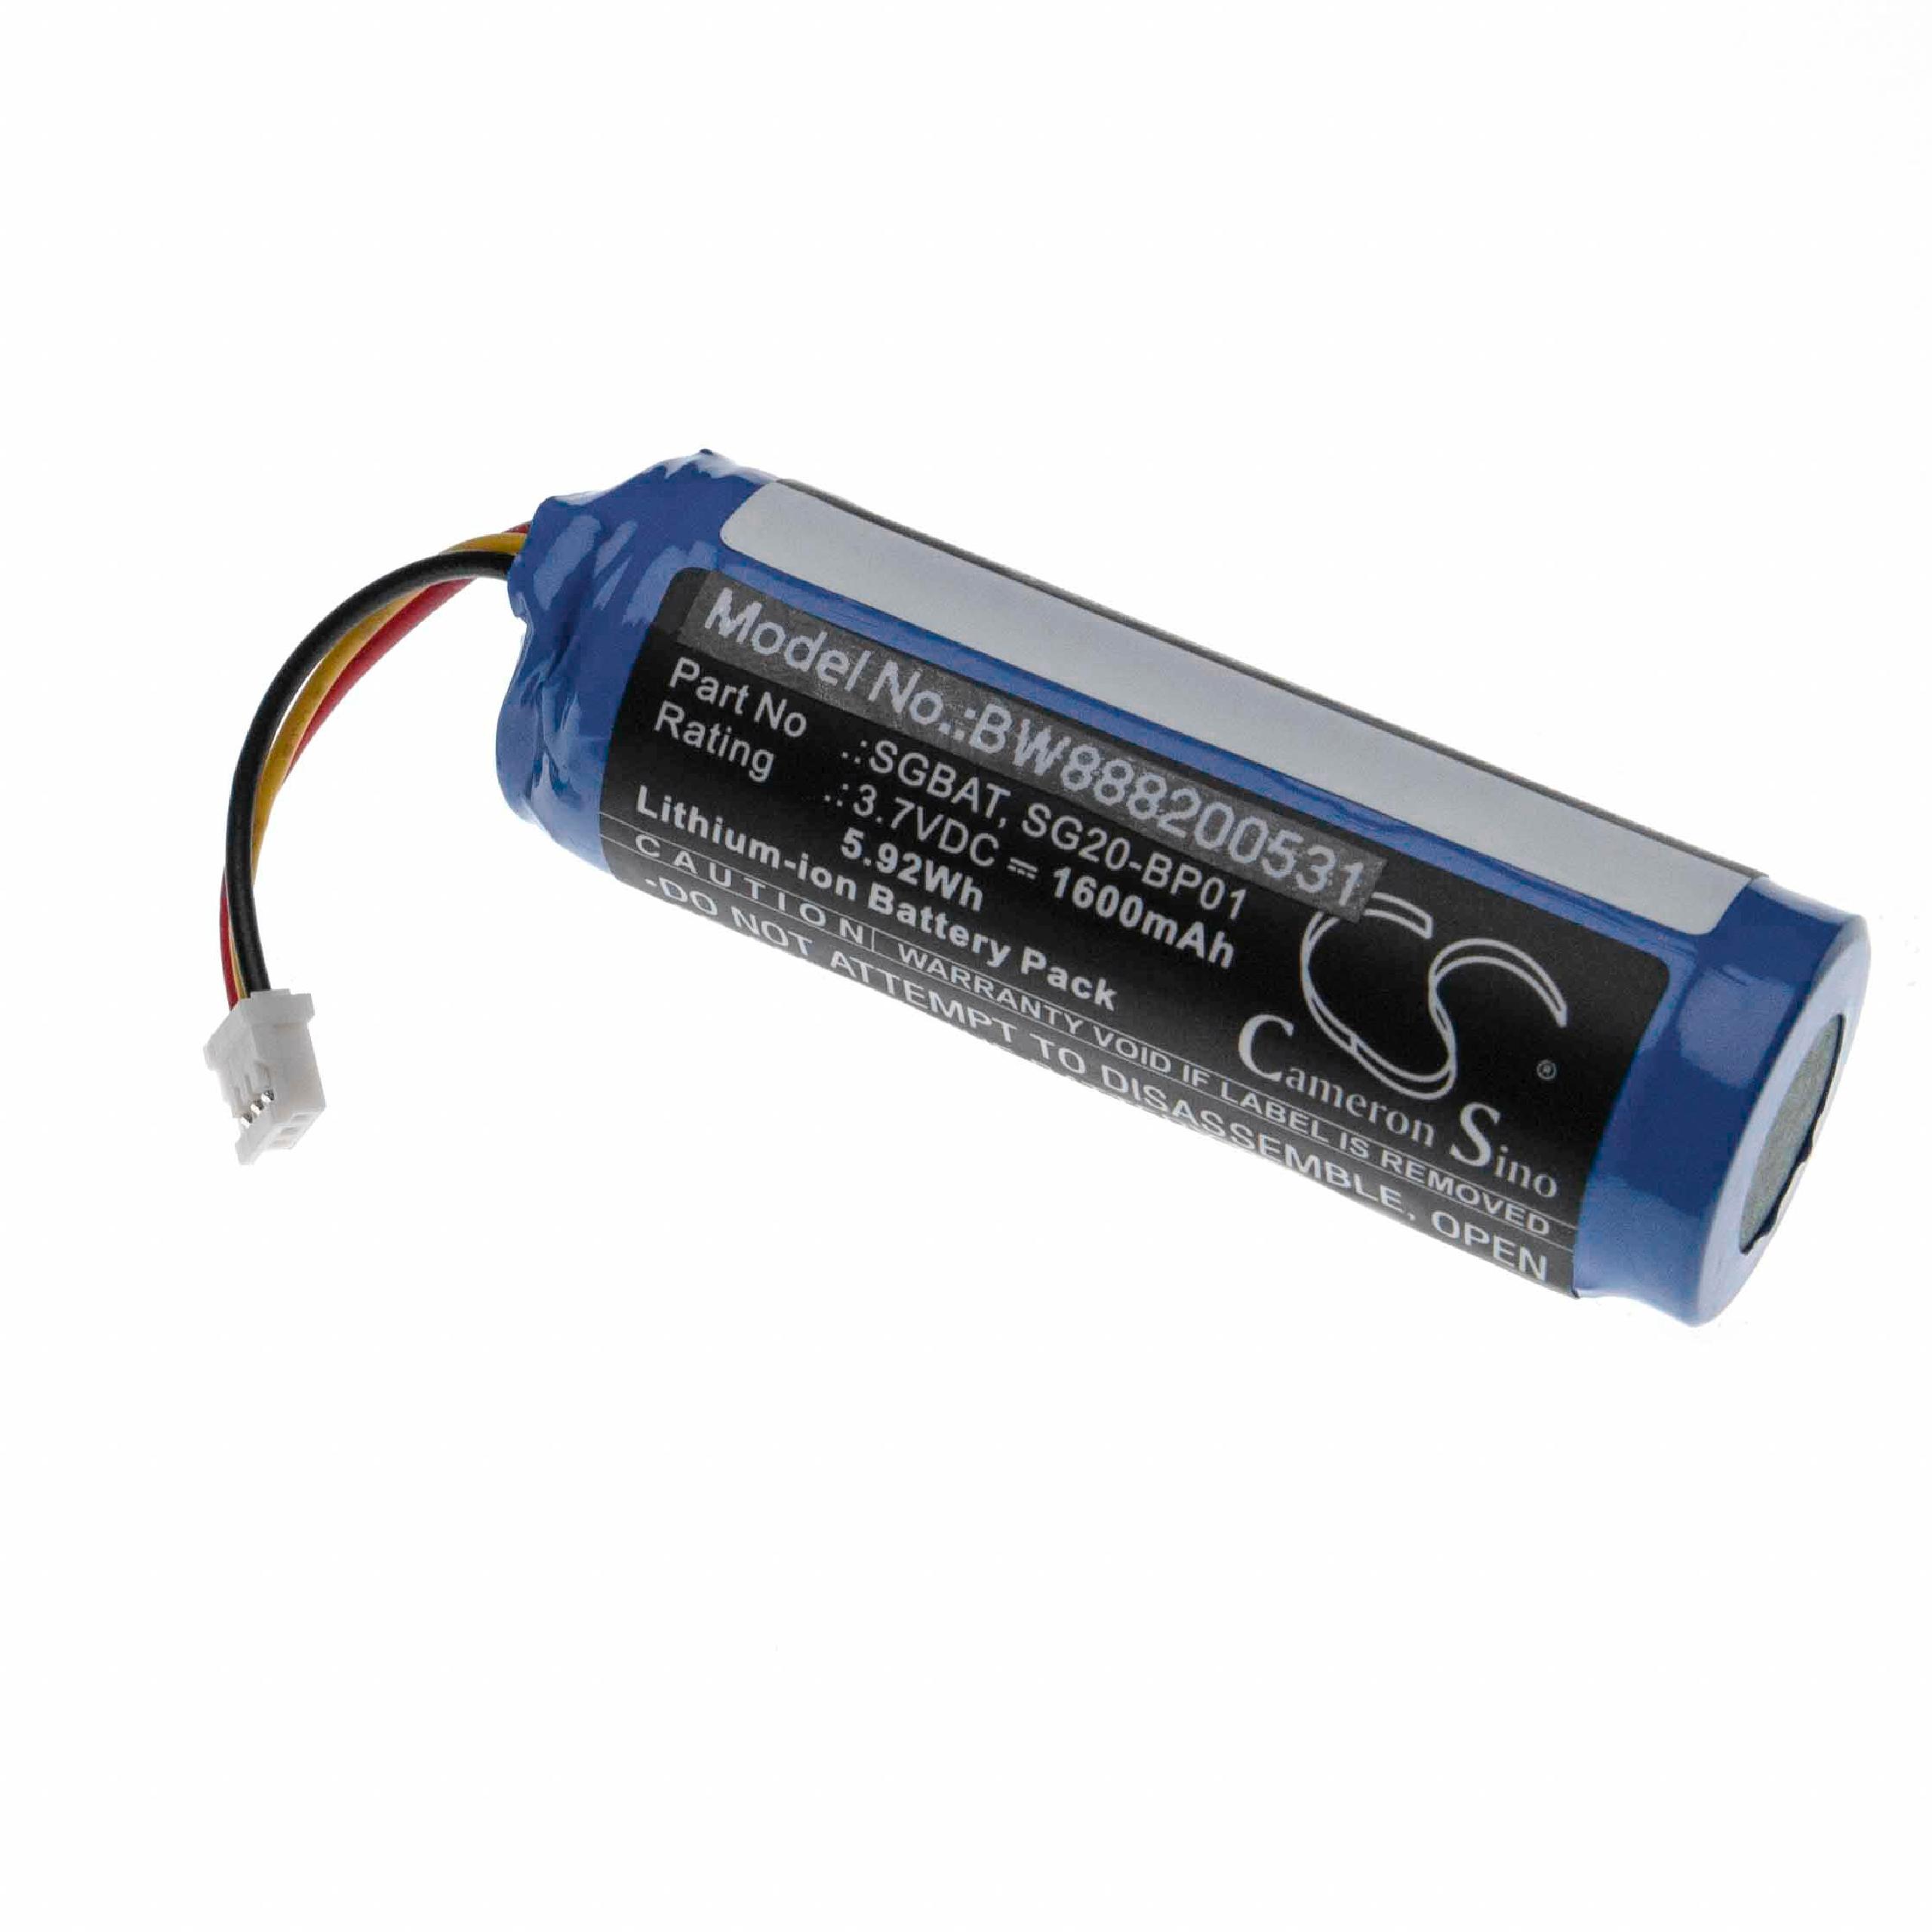 Barcode Scanner POS Battery Replacement for Intermec SGBAT, SG20-BP01 - 1600mAh 3.7V Li-Ion